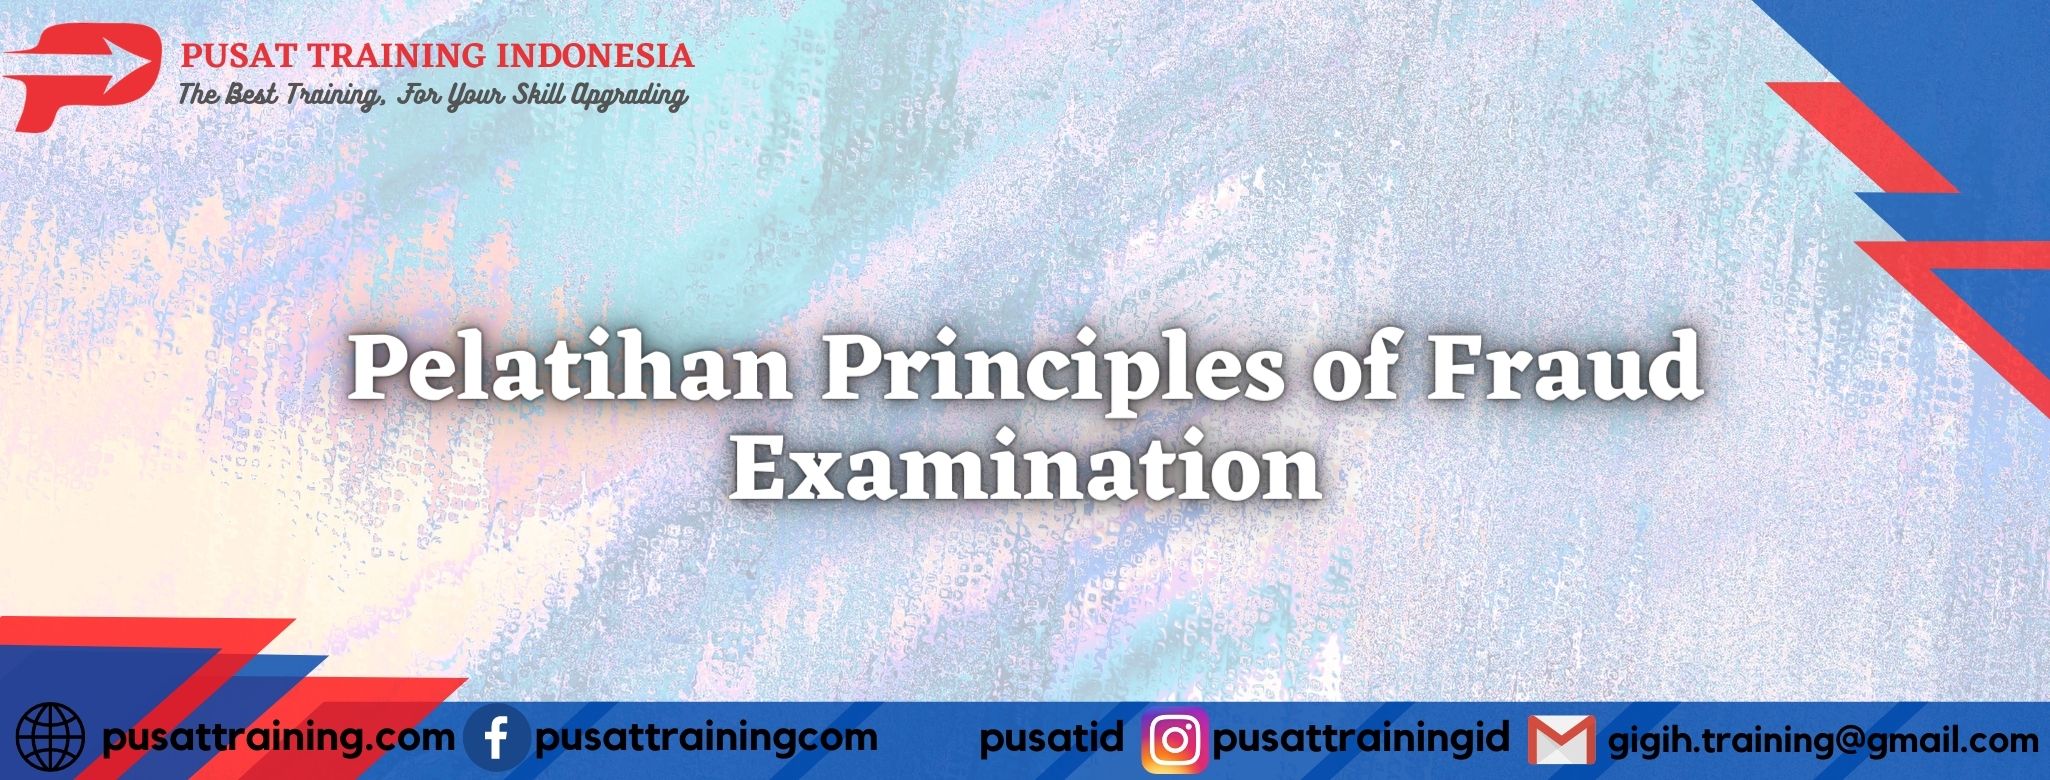 Pelatihan-Principles-of-Fraud-Examination-1